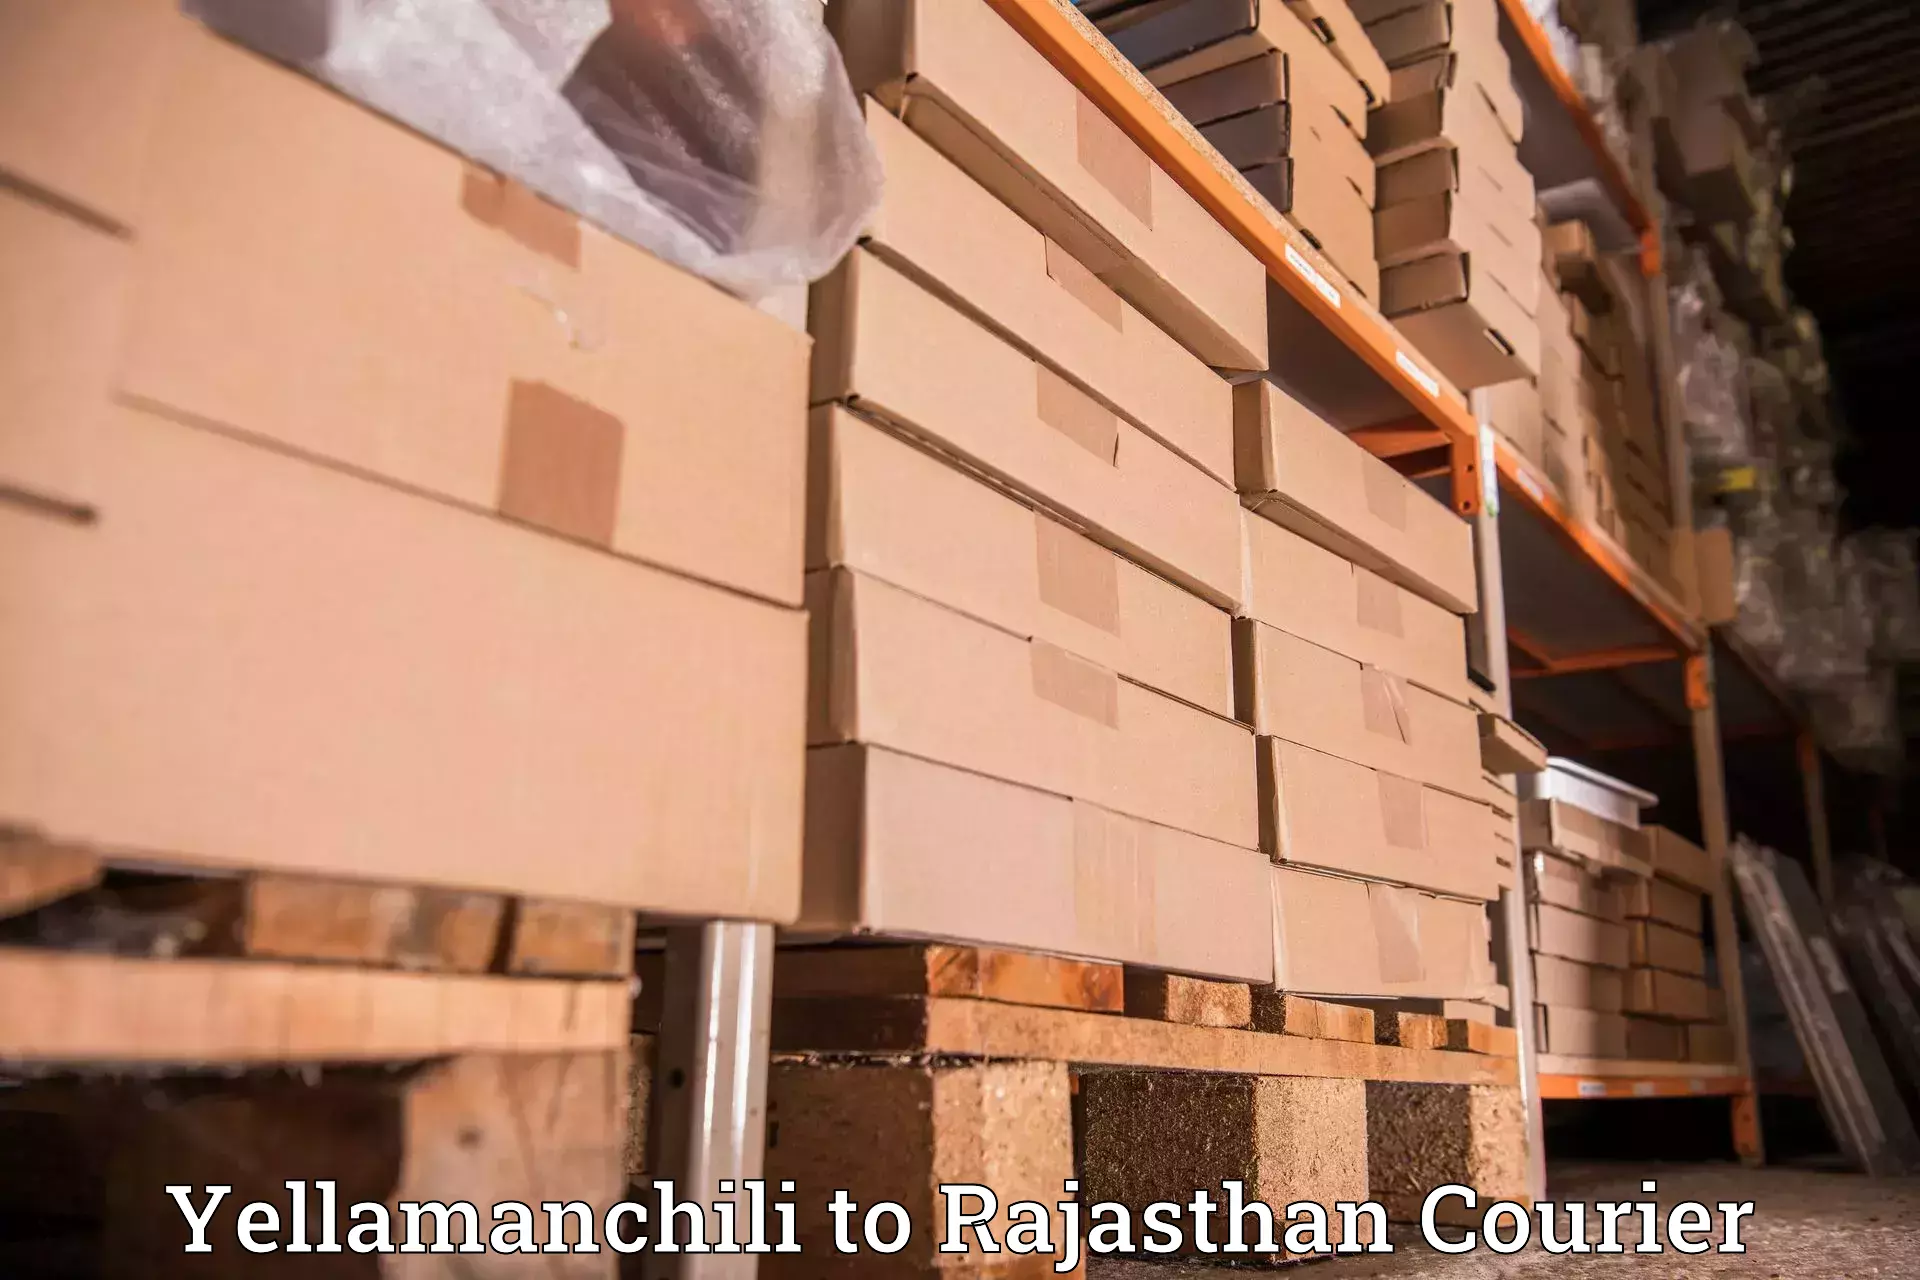 Courier service partnerships Yellamanchili to Chhabra